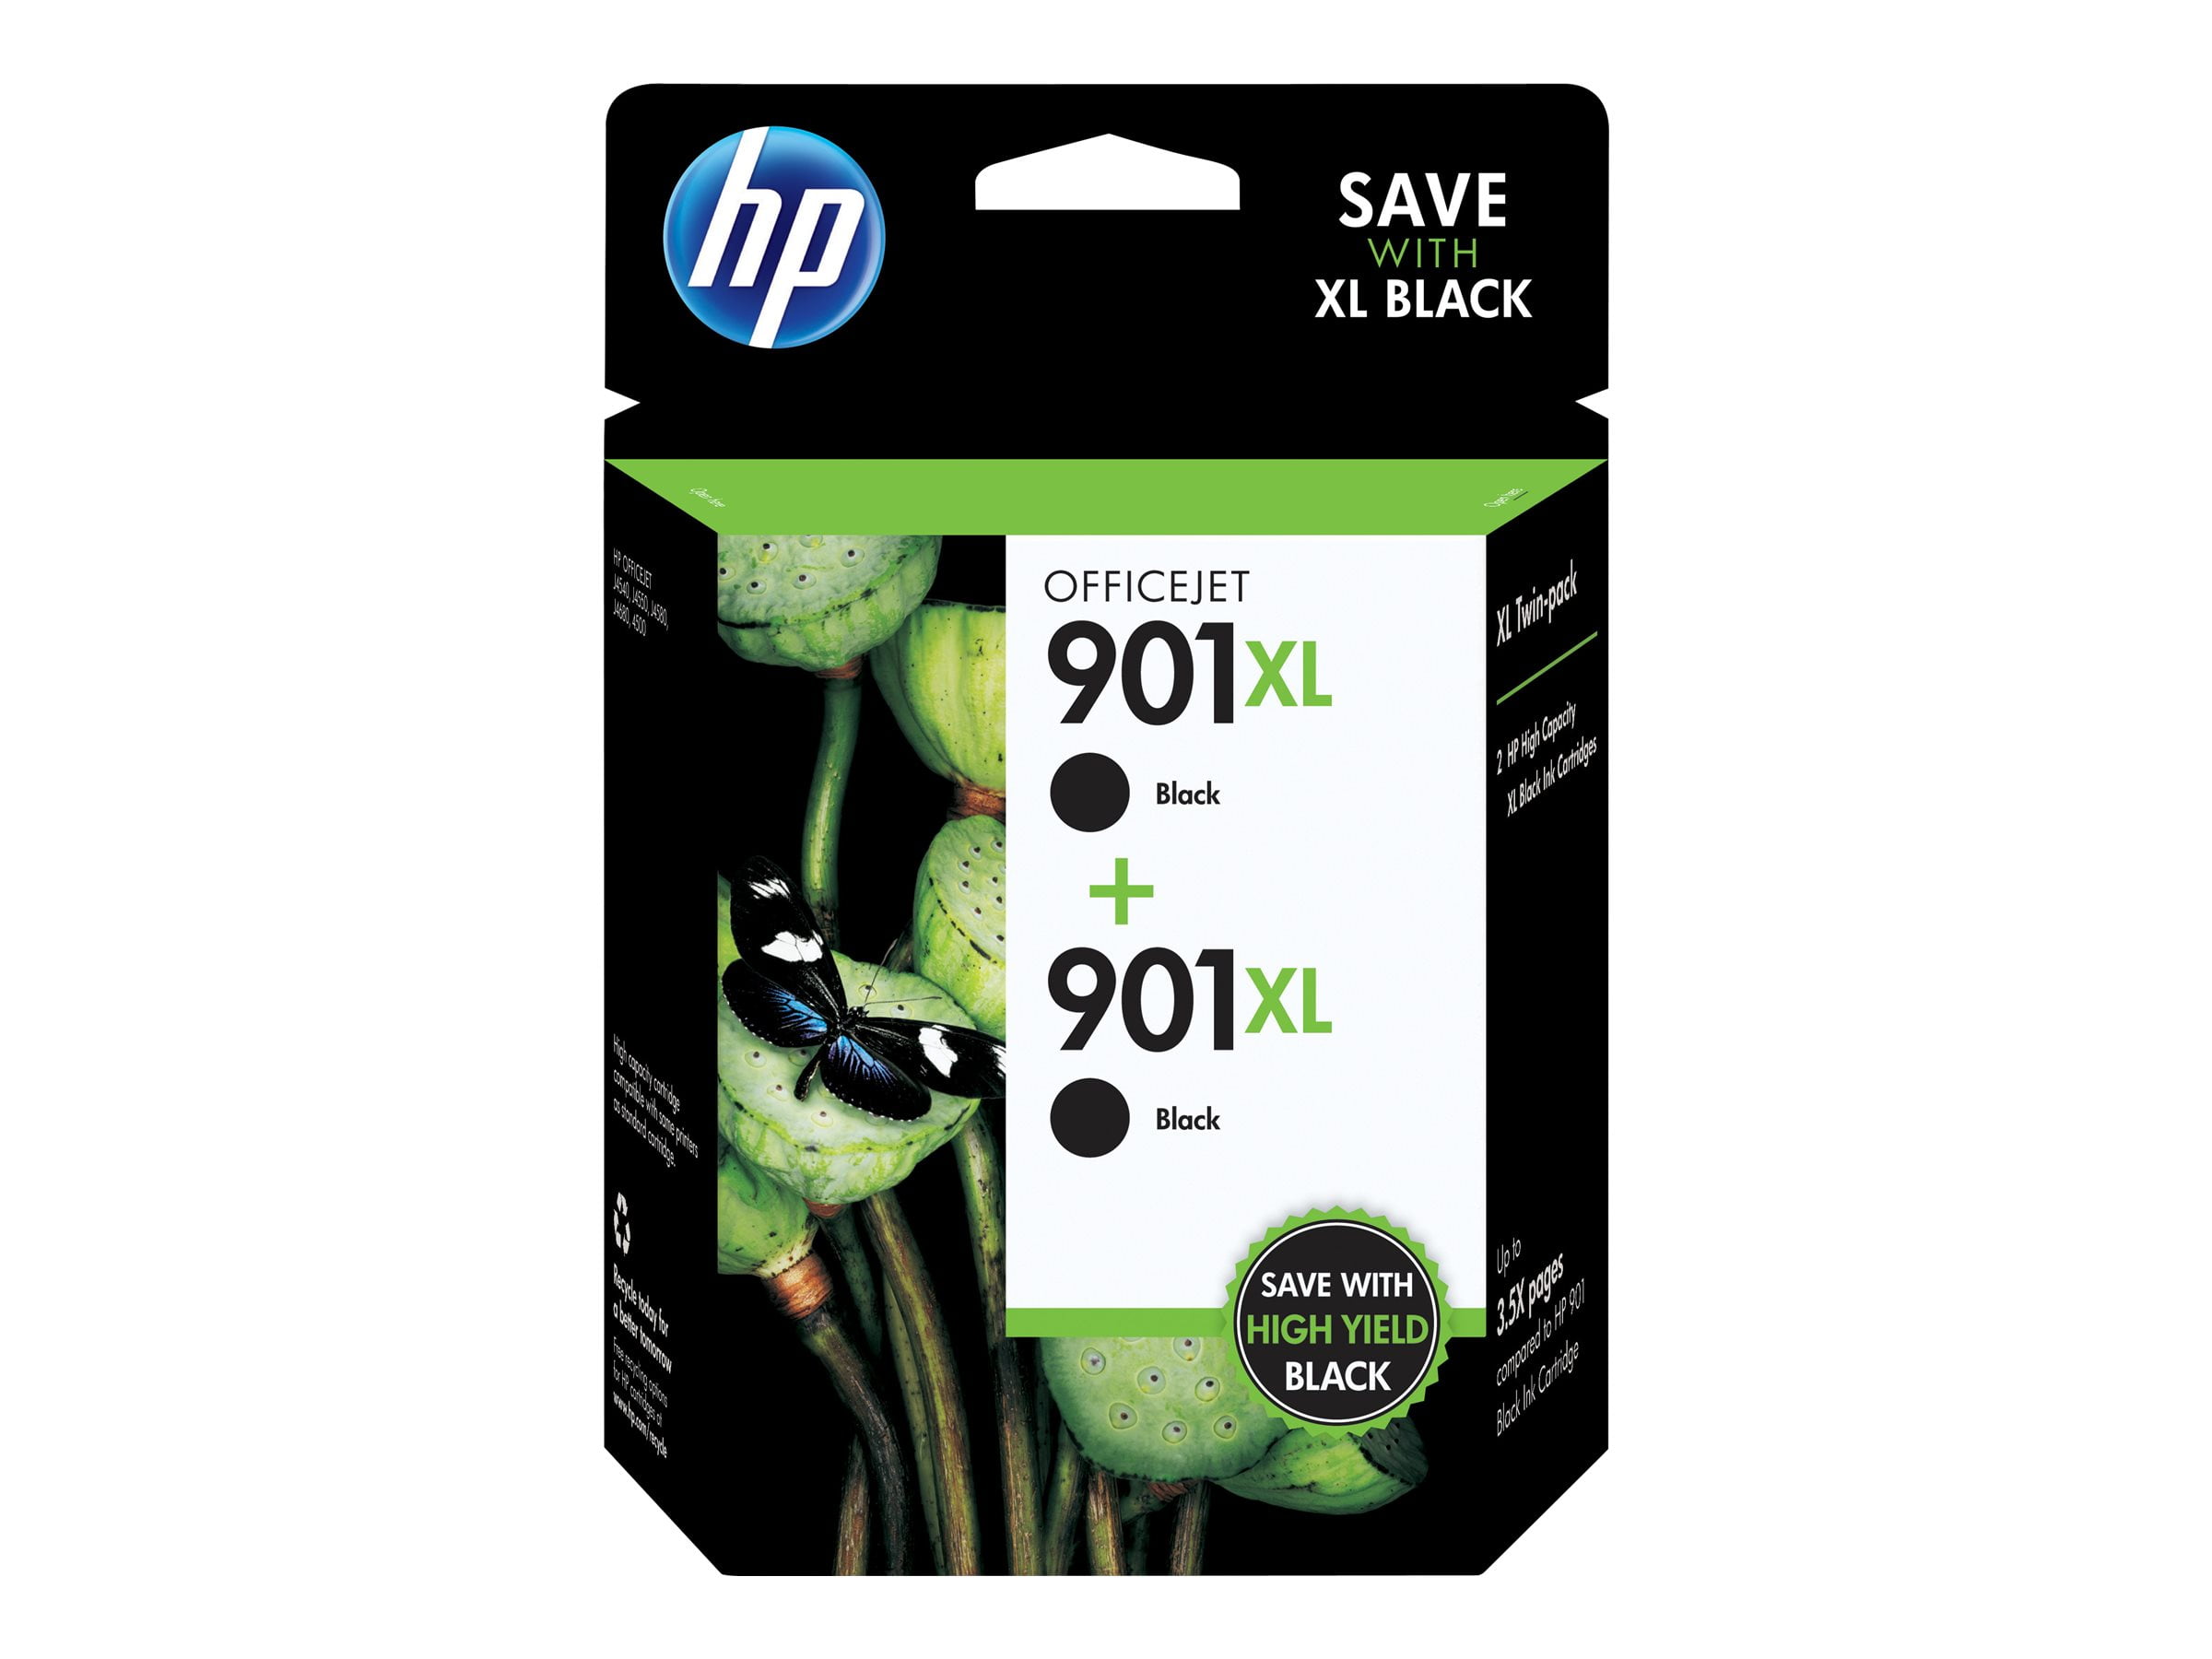 4PK HP 901XL CC654AN Black Ink Cartridge Officejet G510a J4524 J4580 J4660 4500 